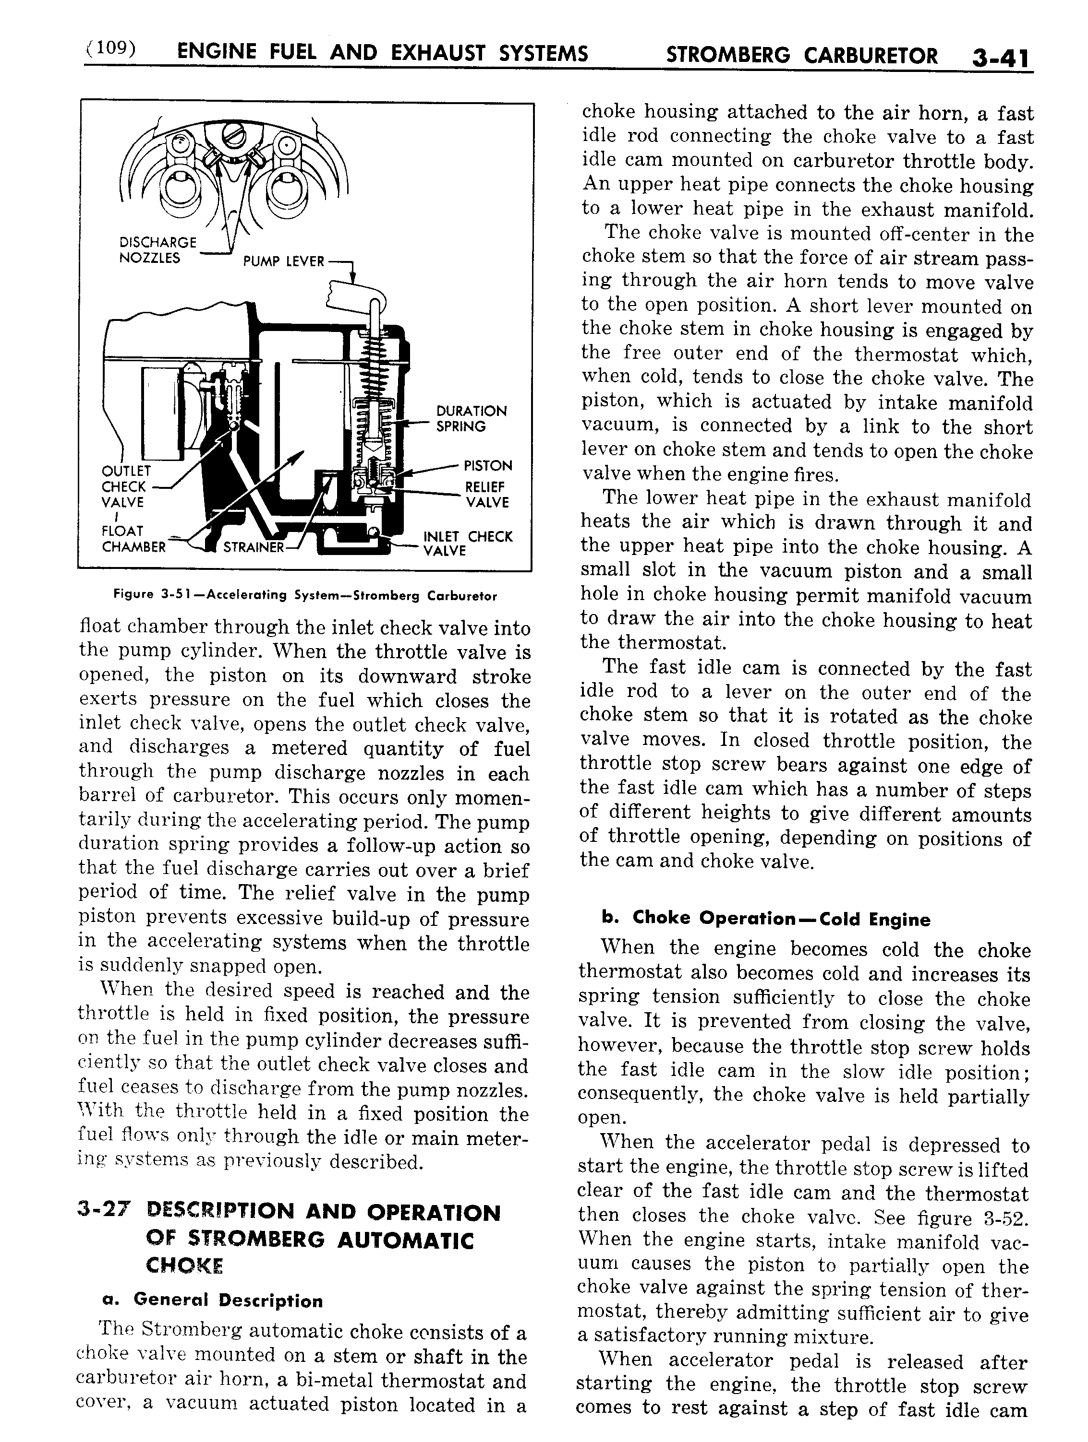 n_04 1951 Buick Shop Manual - Engine Fuel & Exhaust-041-041.jpg